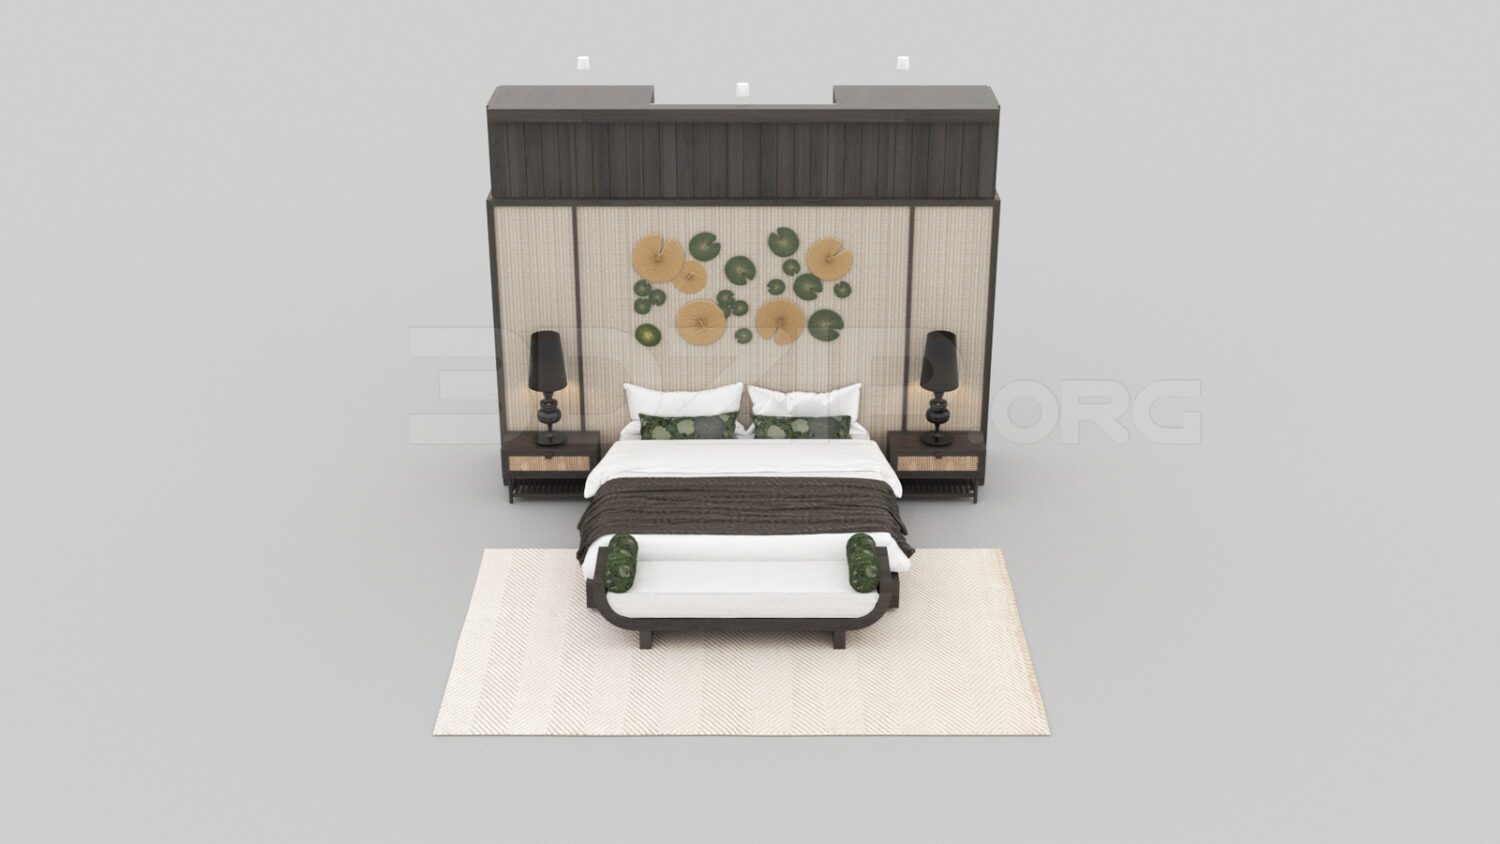 3865. Free 3D Bed Model Download